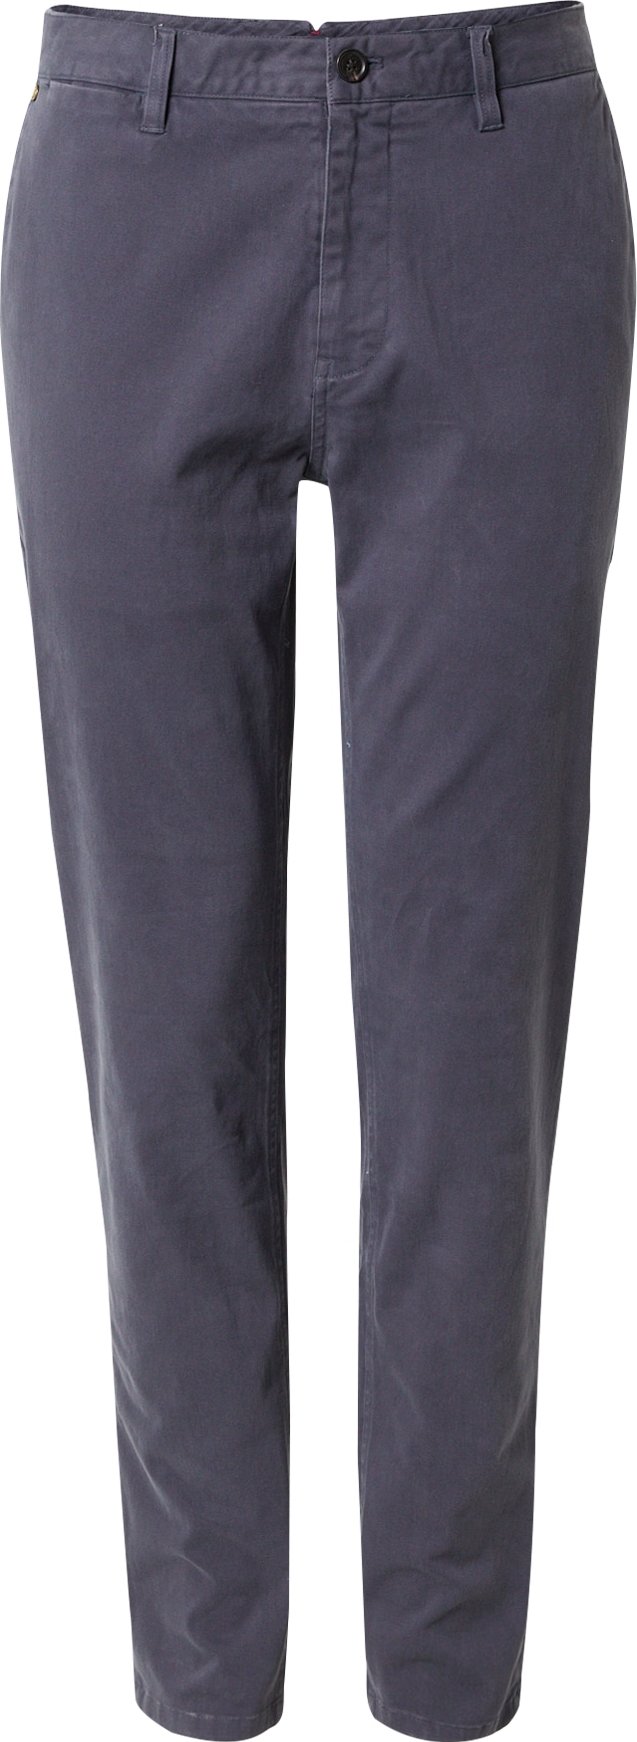 SCOTCH & SODA Chino kalhoty 'STUART' tmavě šedá